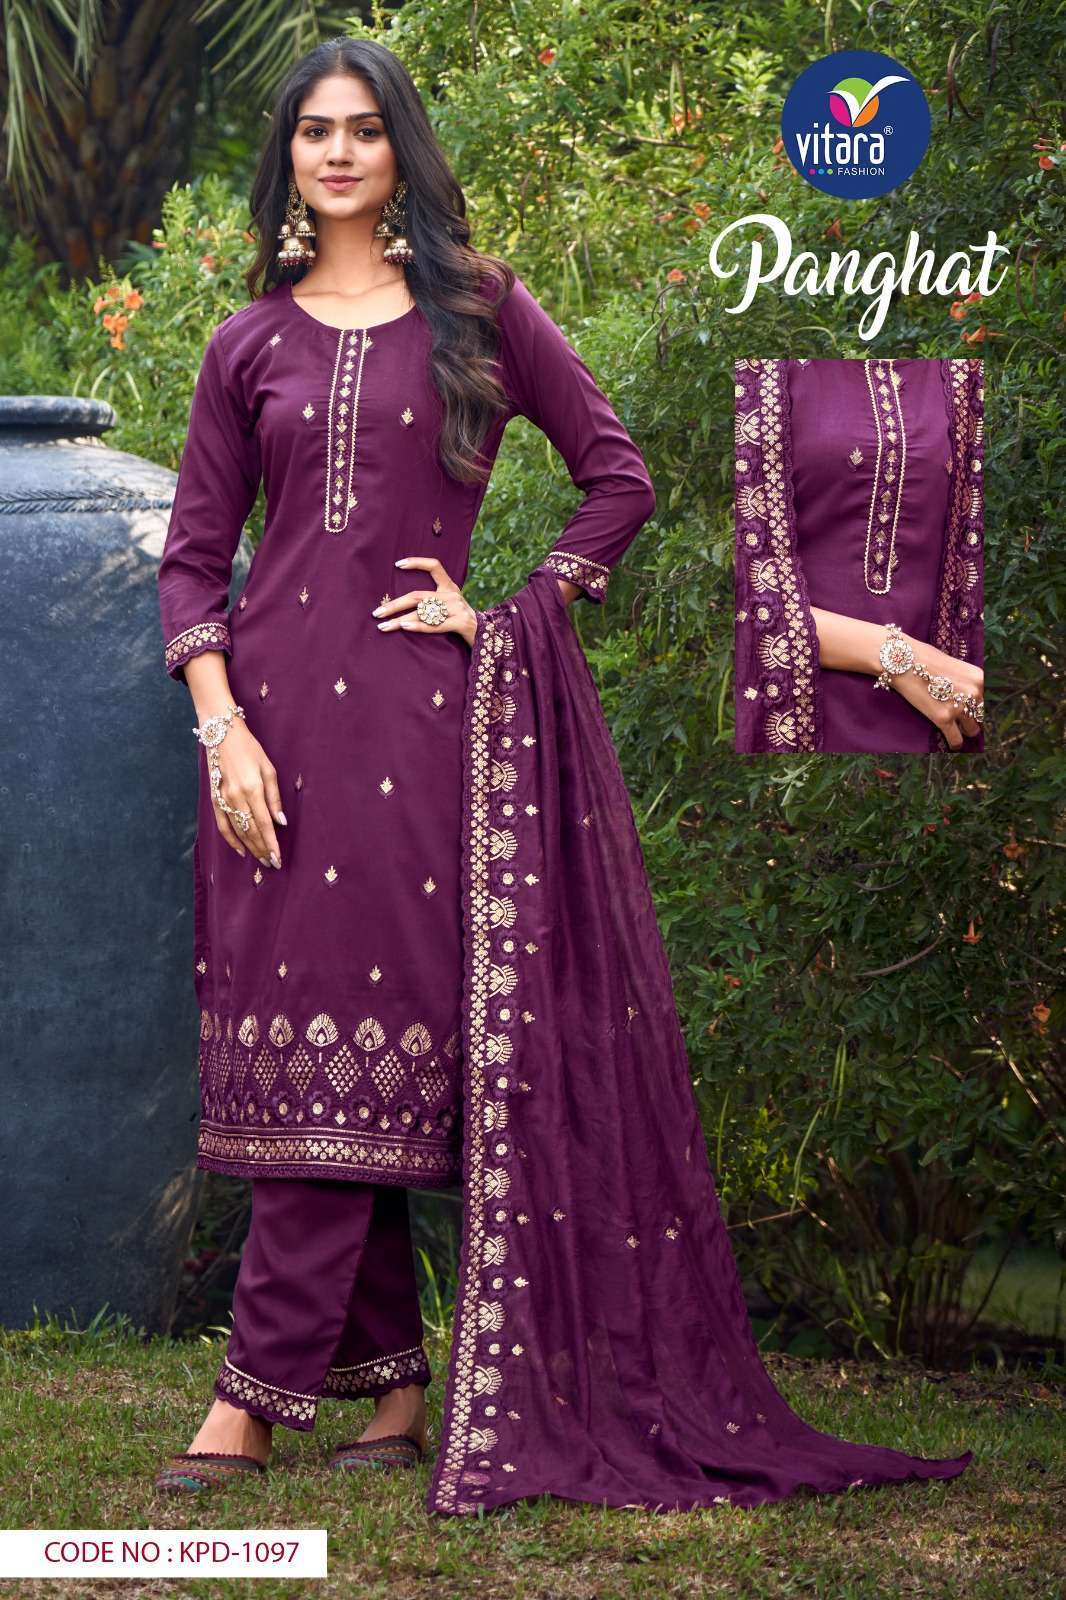 Vitara Fashion PANGHAT Vol -1 Kurti catalogue in Surat